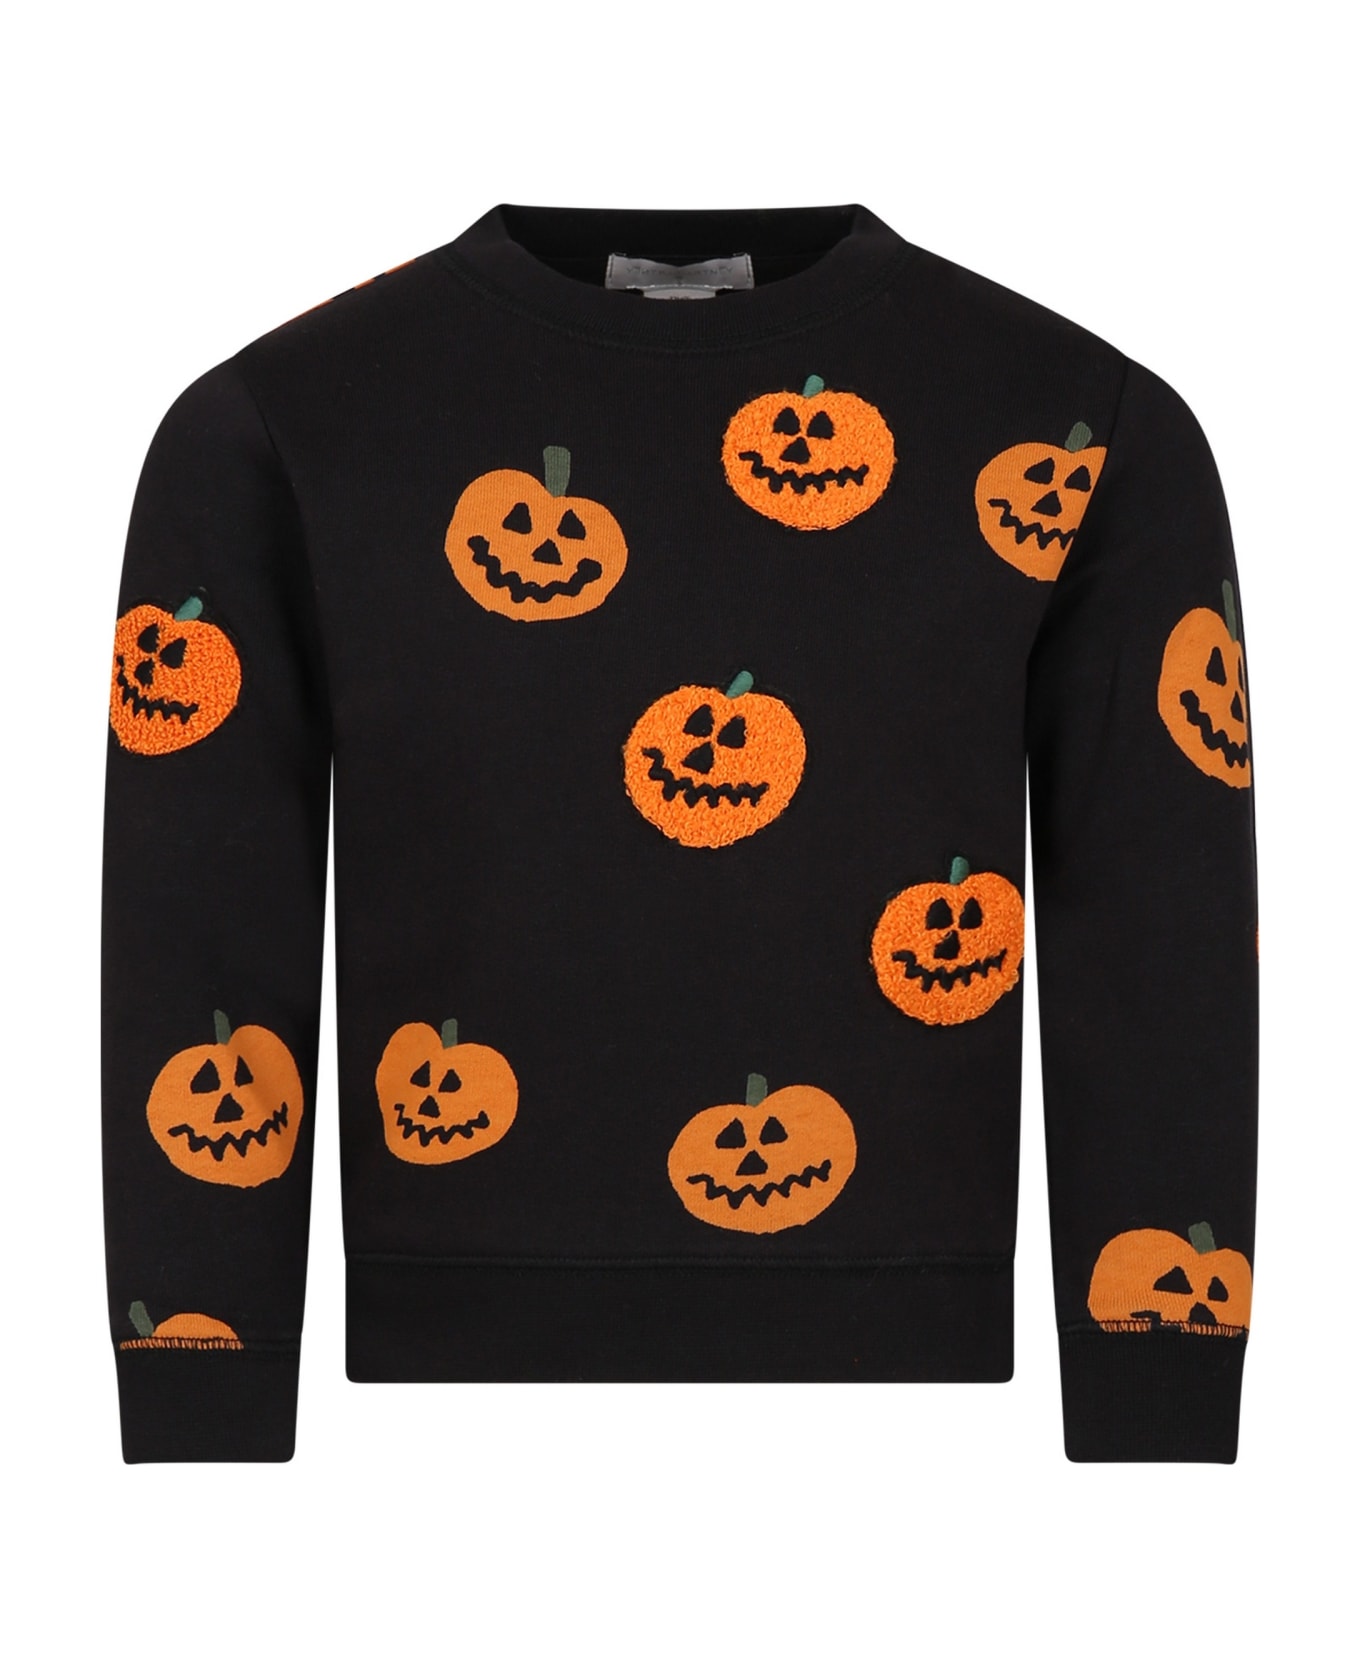 Stella McCartney Kids Black Sweatshirt For Boy With Pumpkins - Black